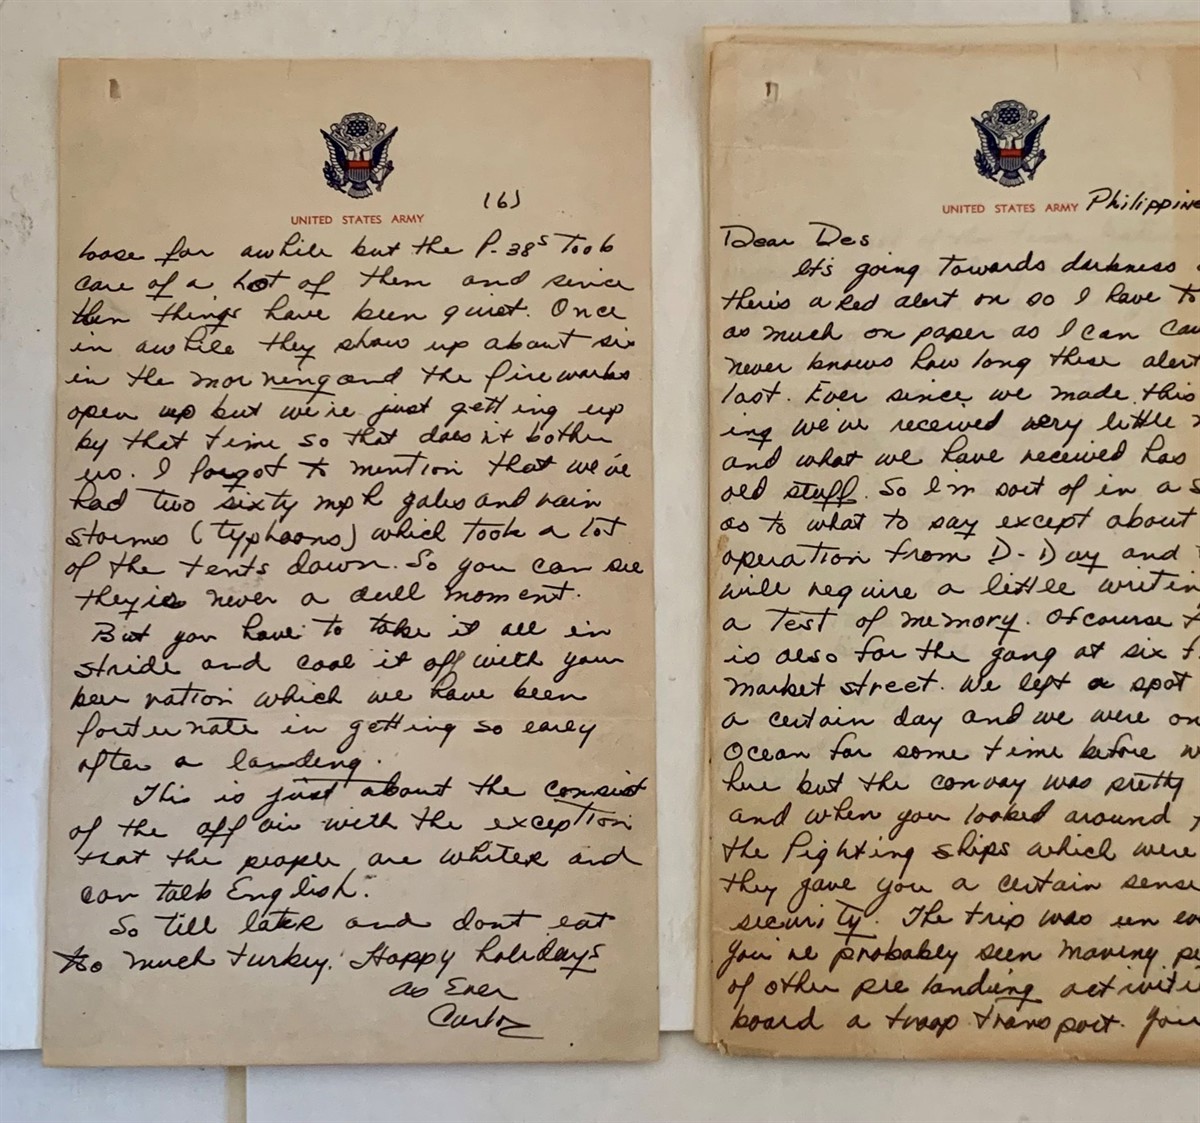 (EPHEMERA) [WORLD WAR 2] [PACIFIC THEATRE] - World War II Army Letter Describing the Battle of the Philippine Sea